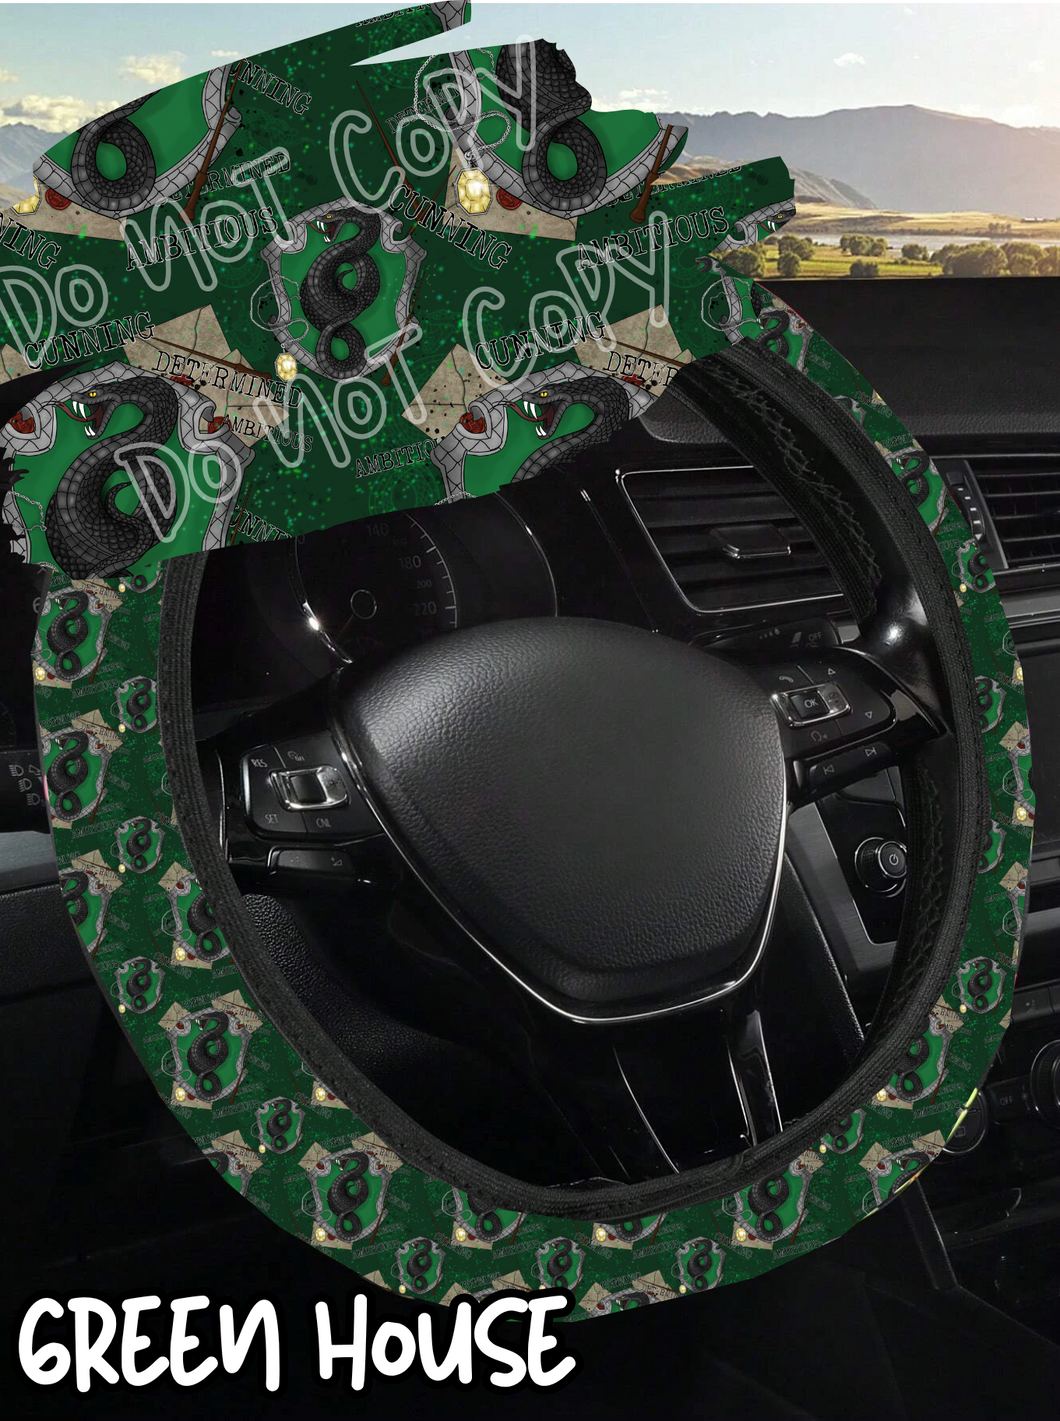 Green House - Steering Wheel Cover Preorder Round 3 Closing 10/25 ETA Early Dec